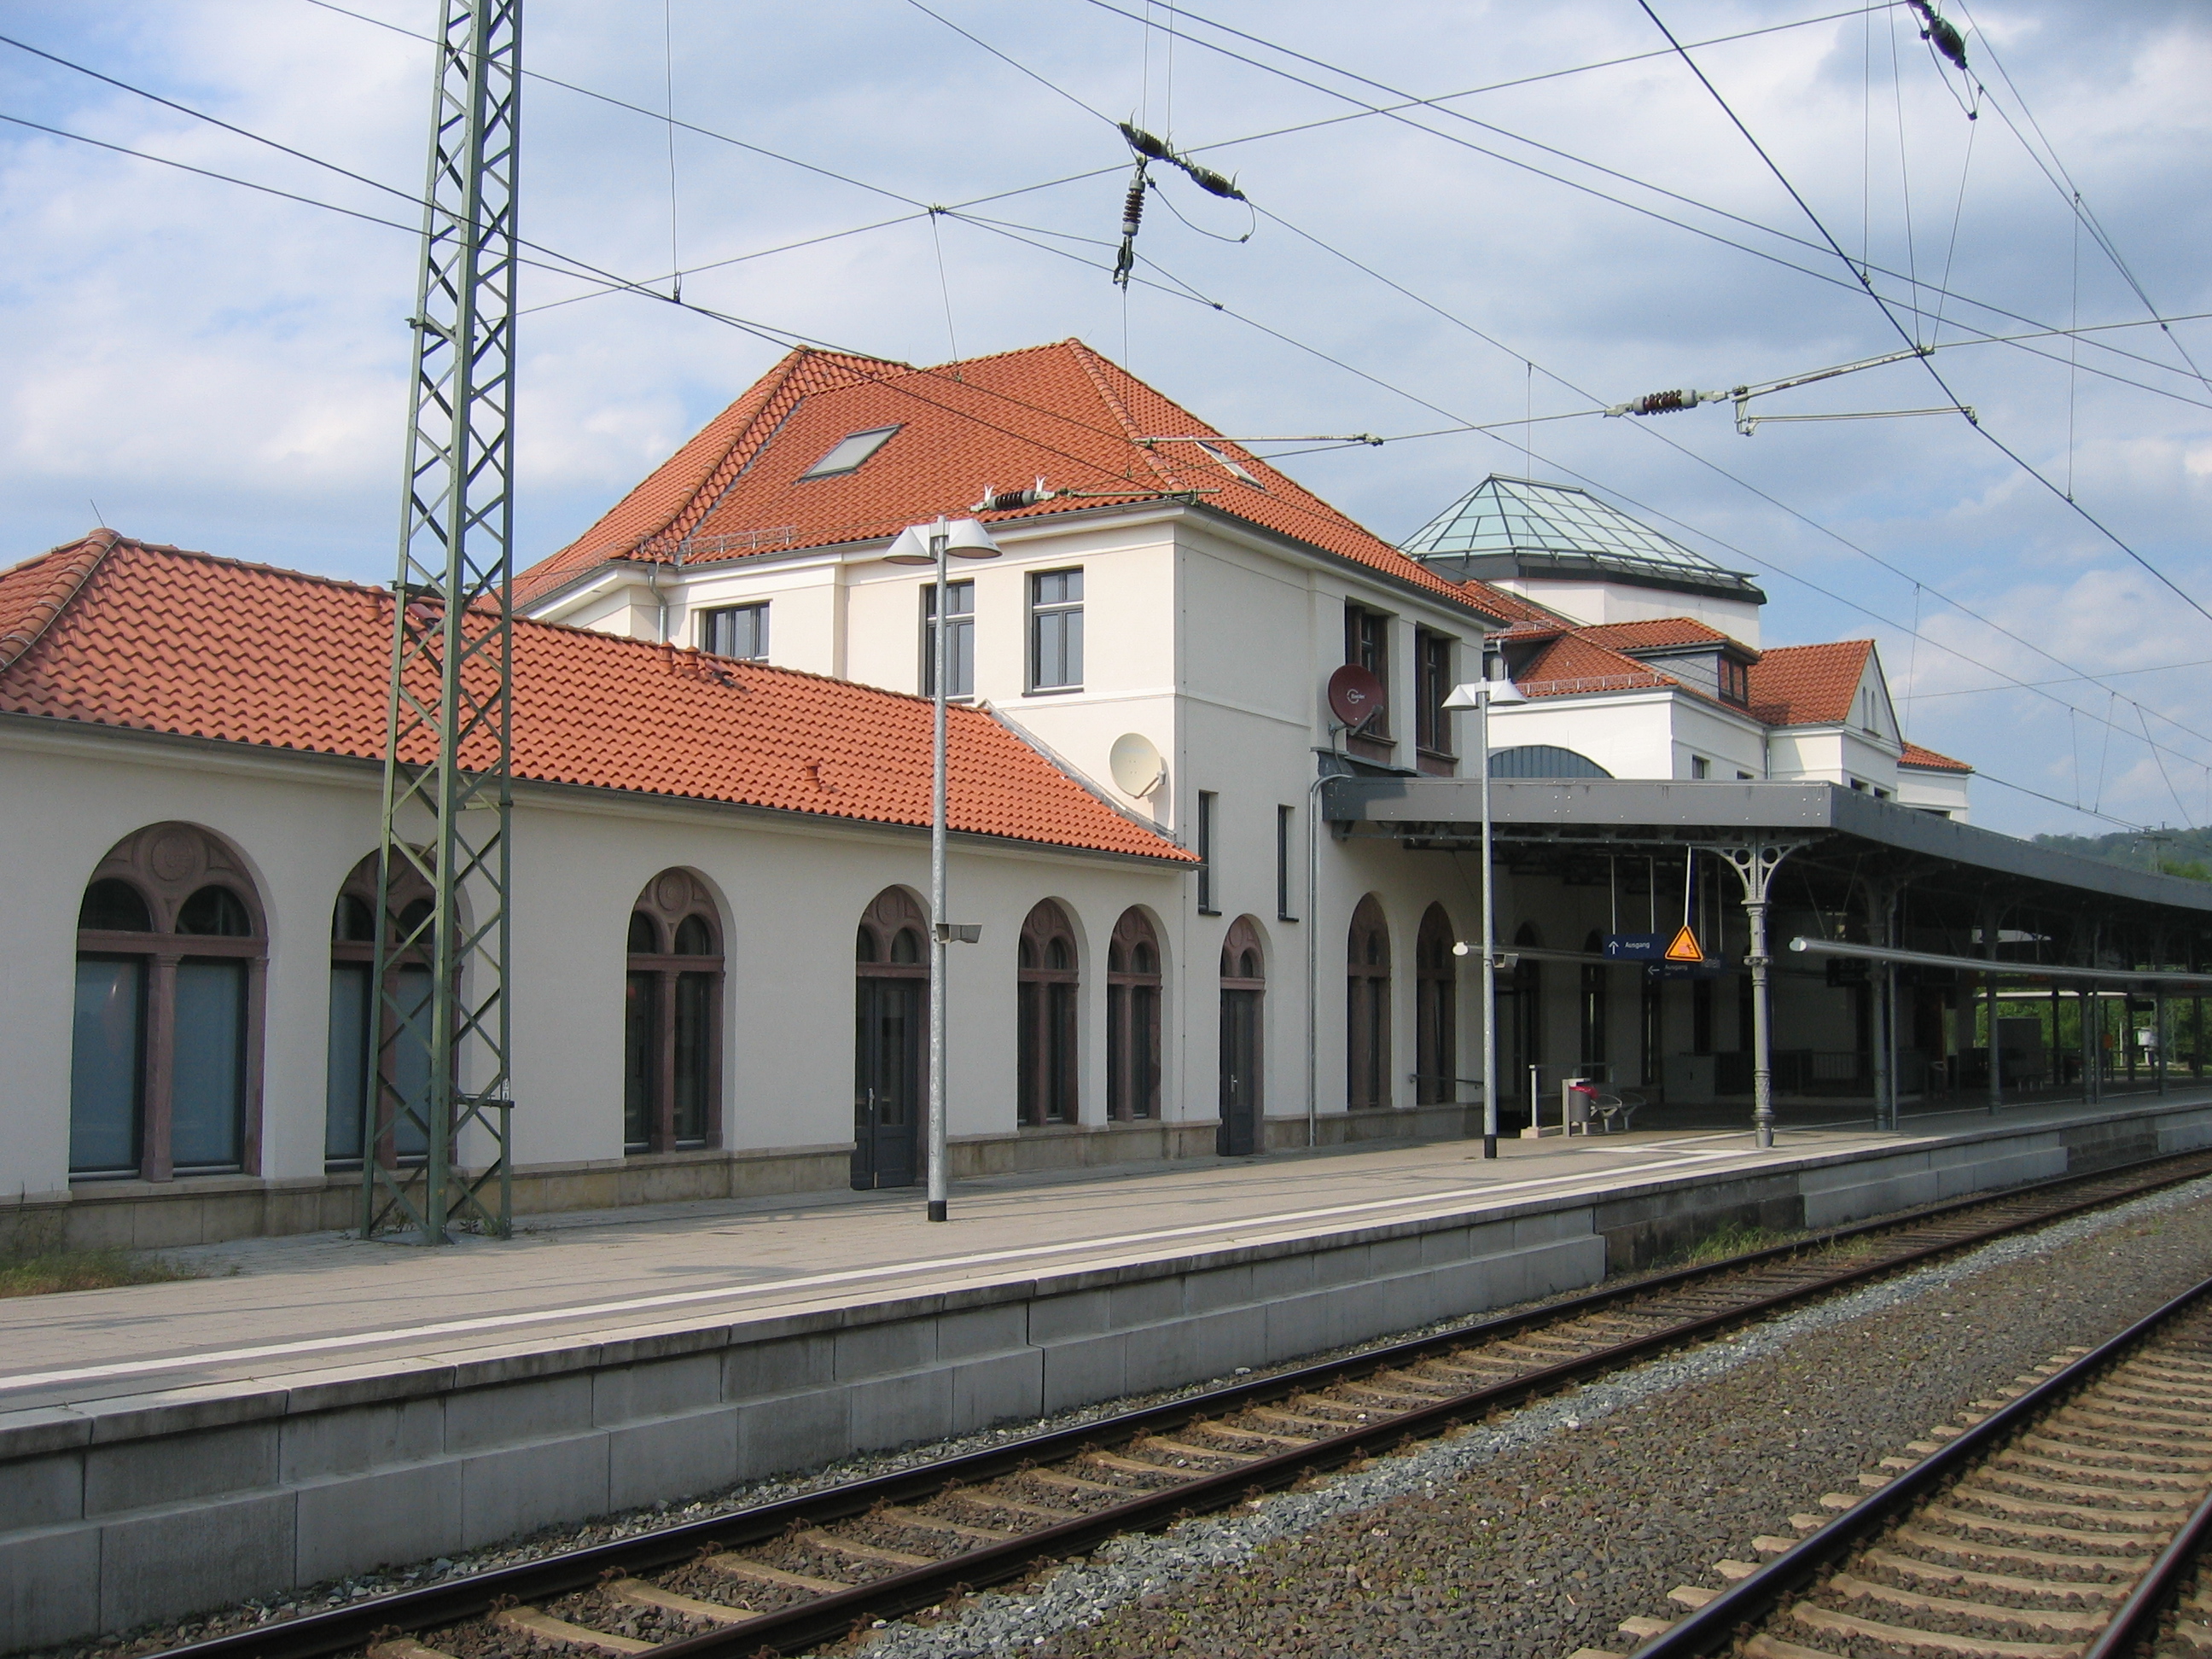 Bahnhof Hameln